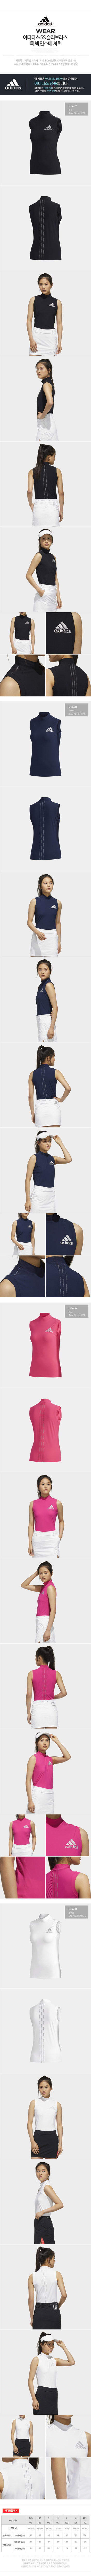 adidas_w_neck_sleeveless_tshirt_20.jpg